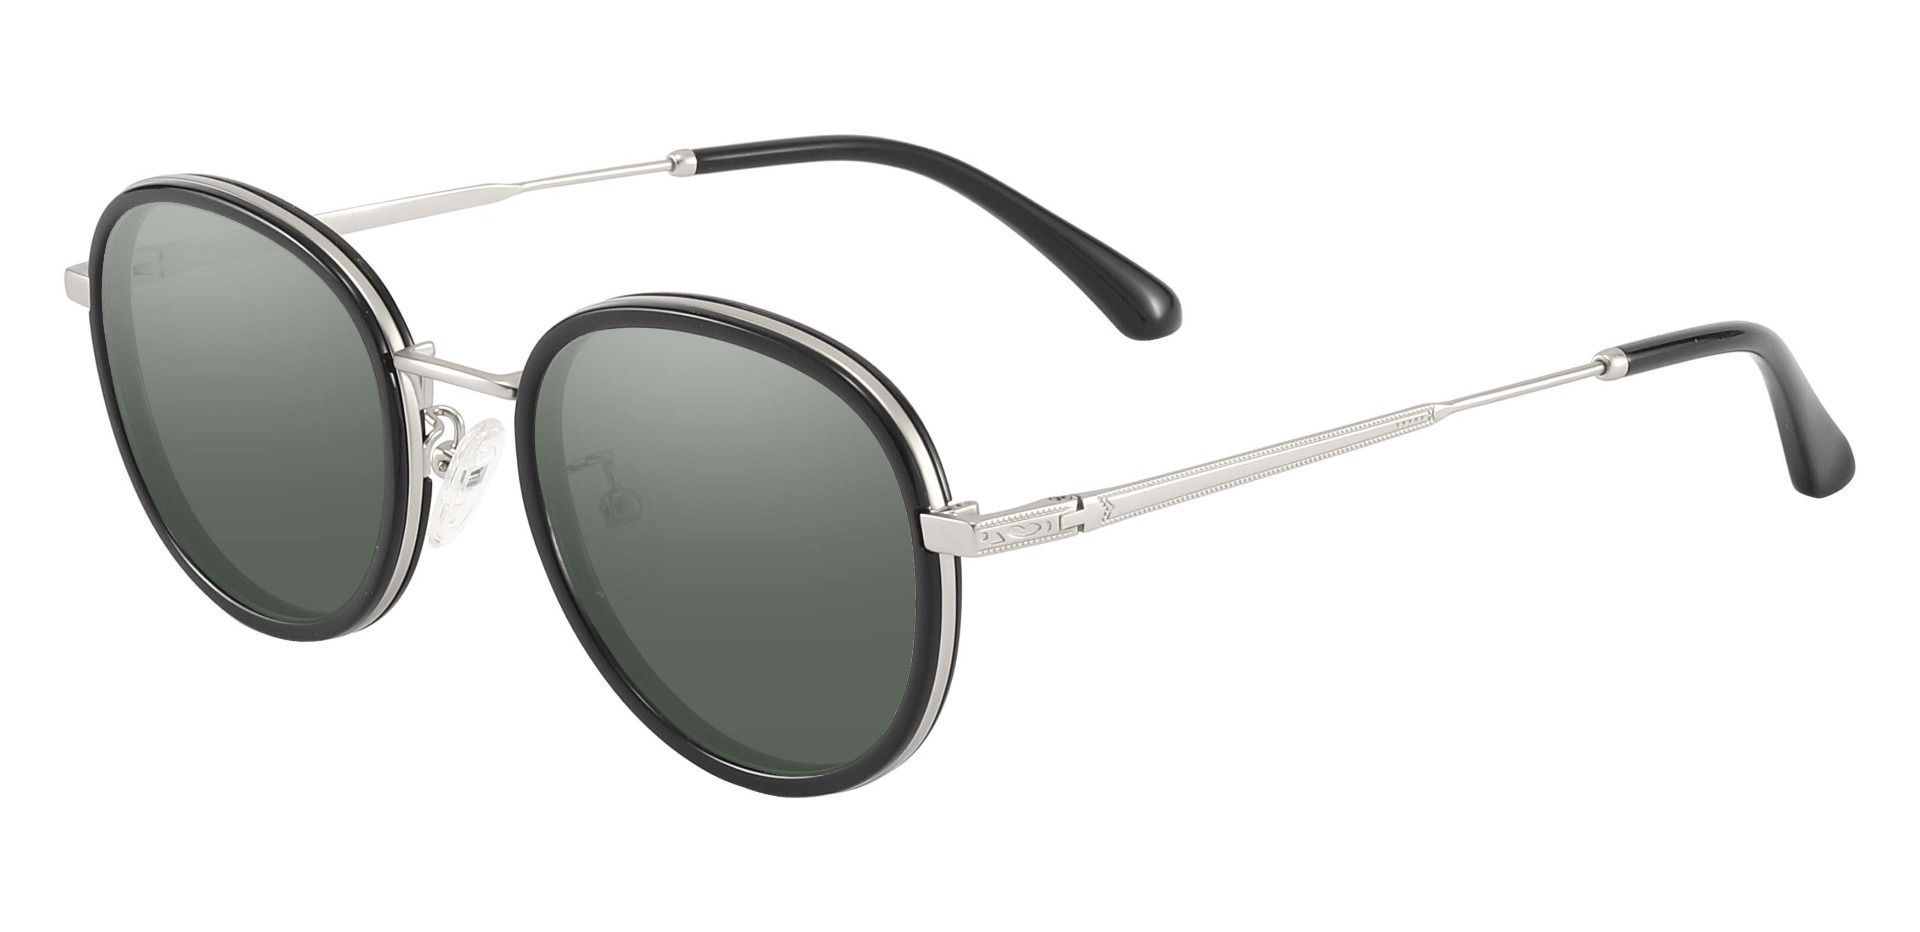 Edmore Oval Prescription Sunglasses - Black Frame With Green Lenses